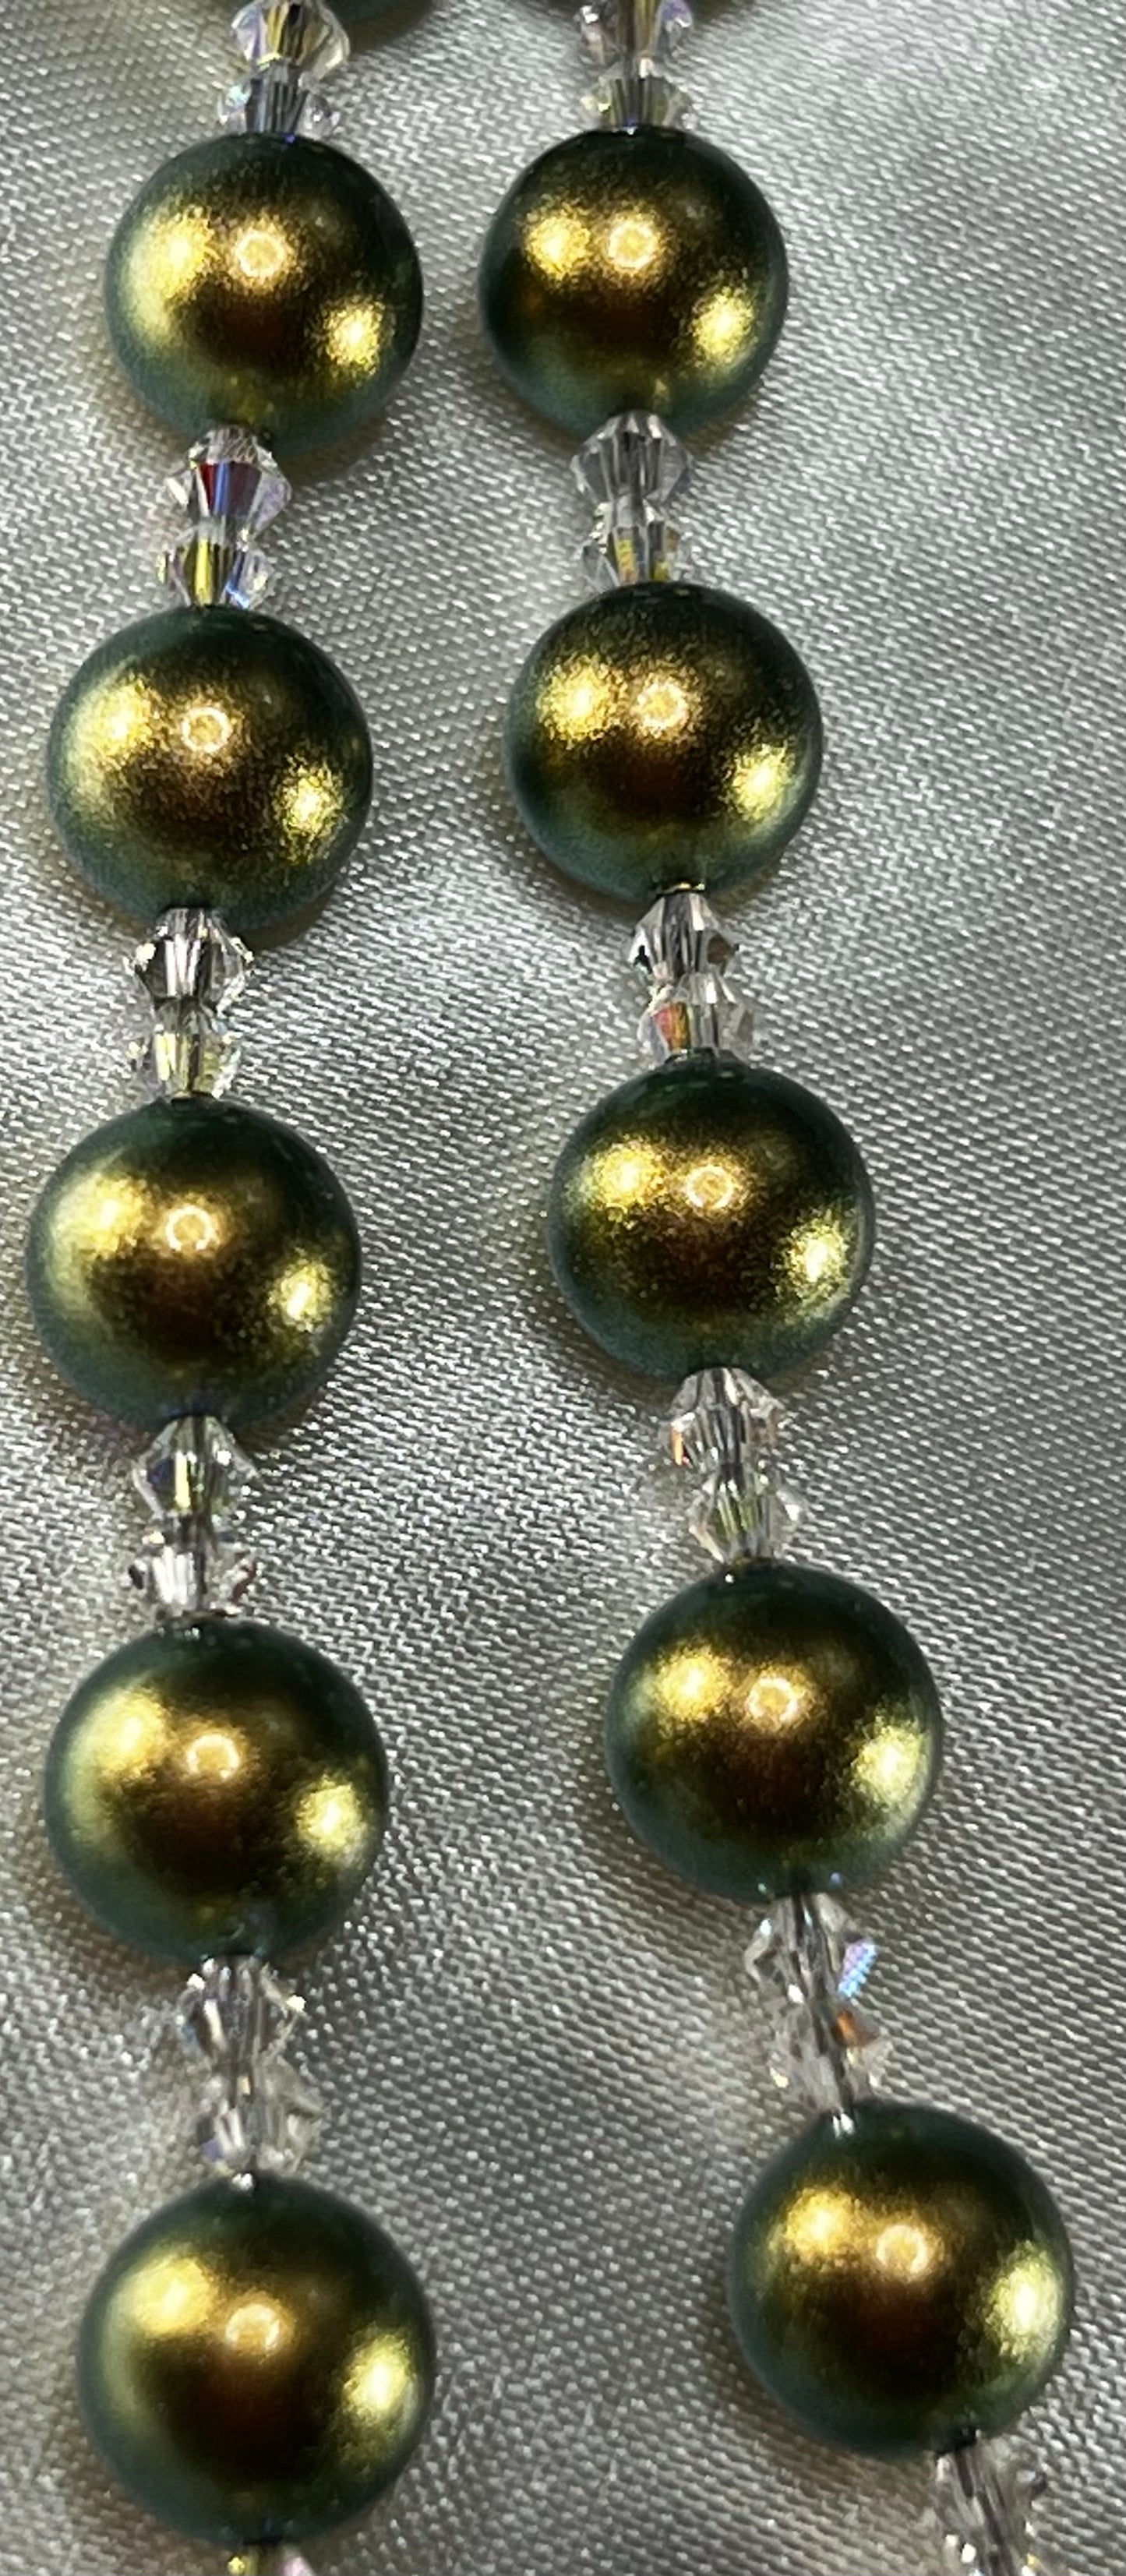 Iridescent Green Swarovski Pearl beads with Swarovski Crystal spacers.